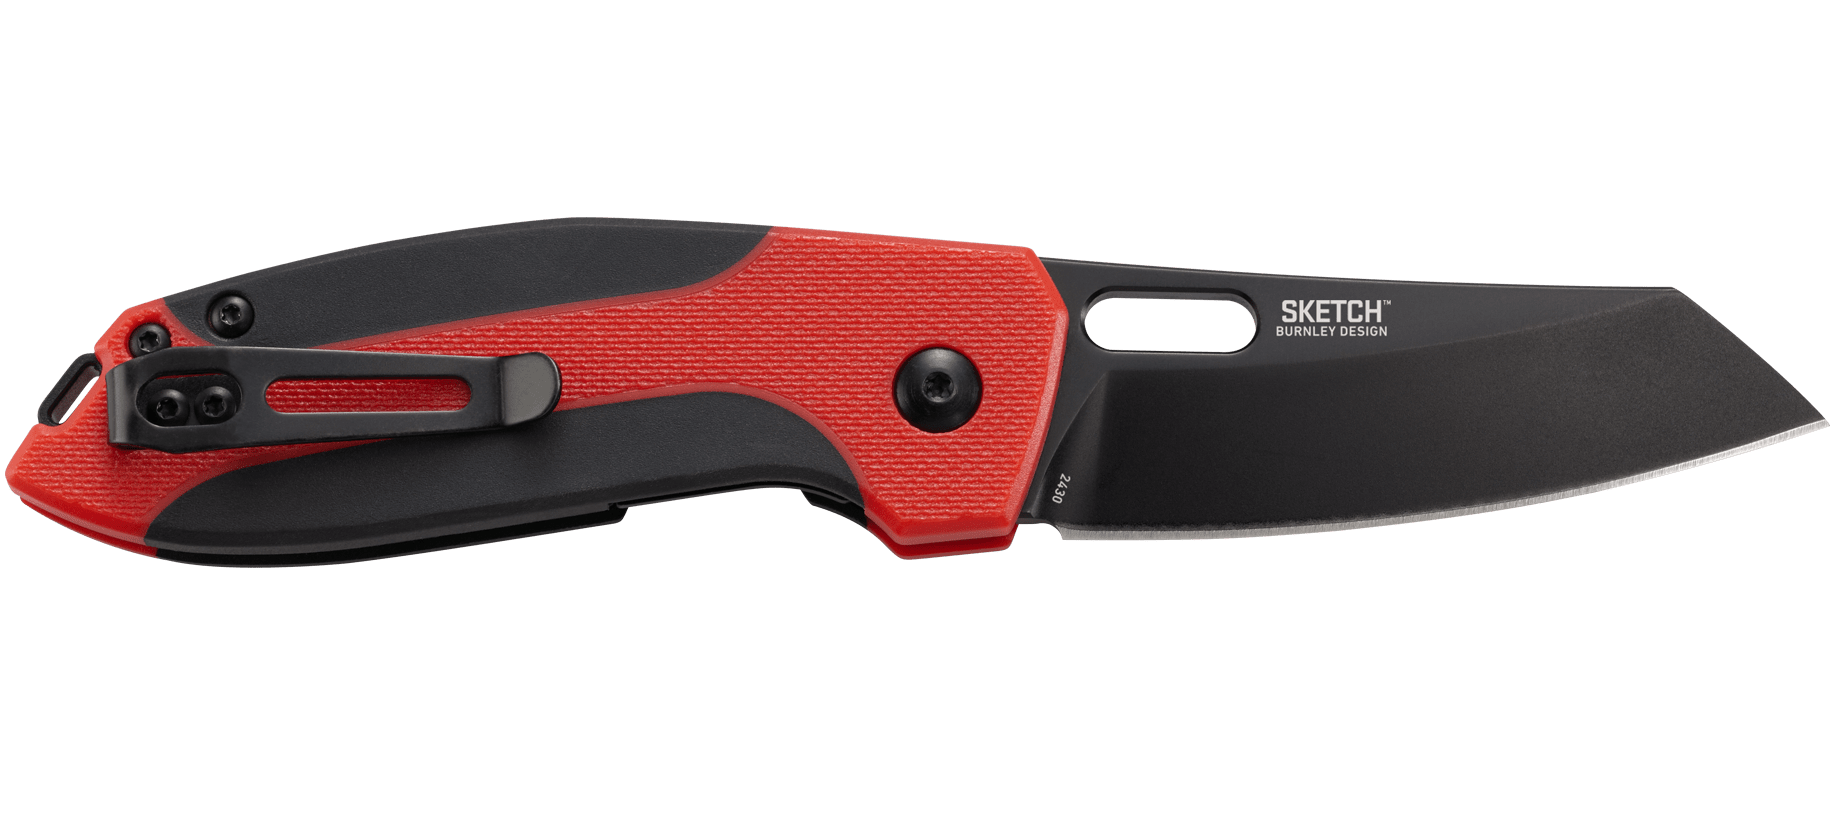 Складной нож CRKT Sketch™ Red, сталь 8Cr13MoV, рукоять ABS пластик - фото 3